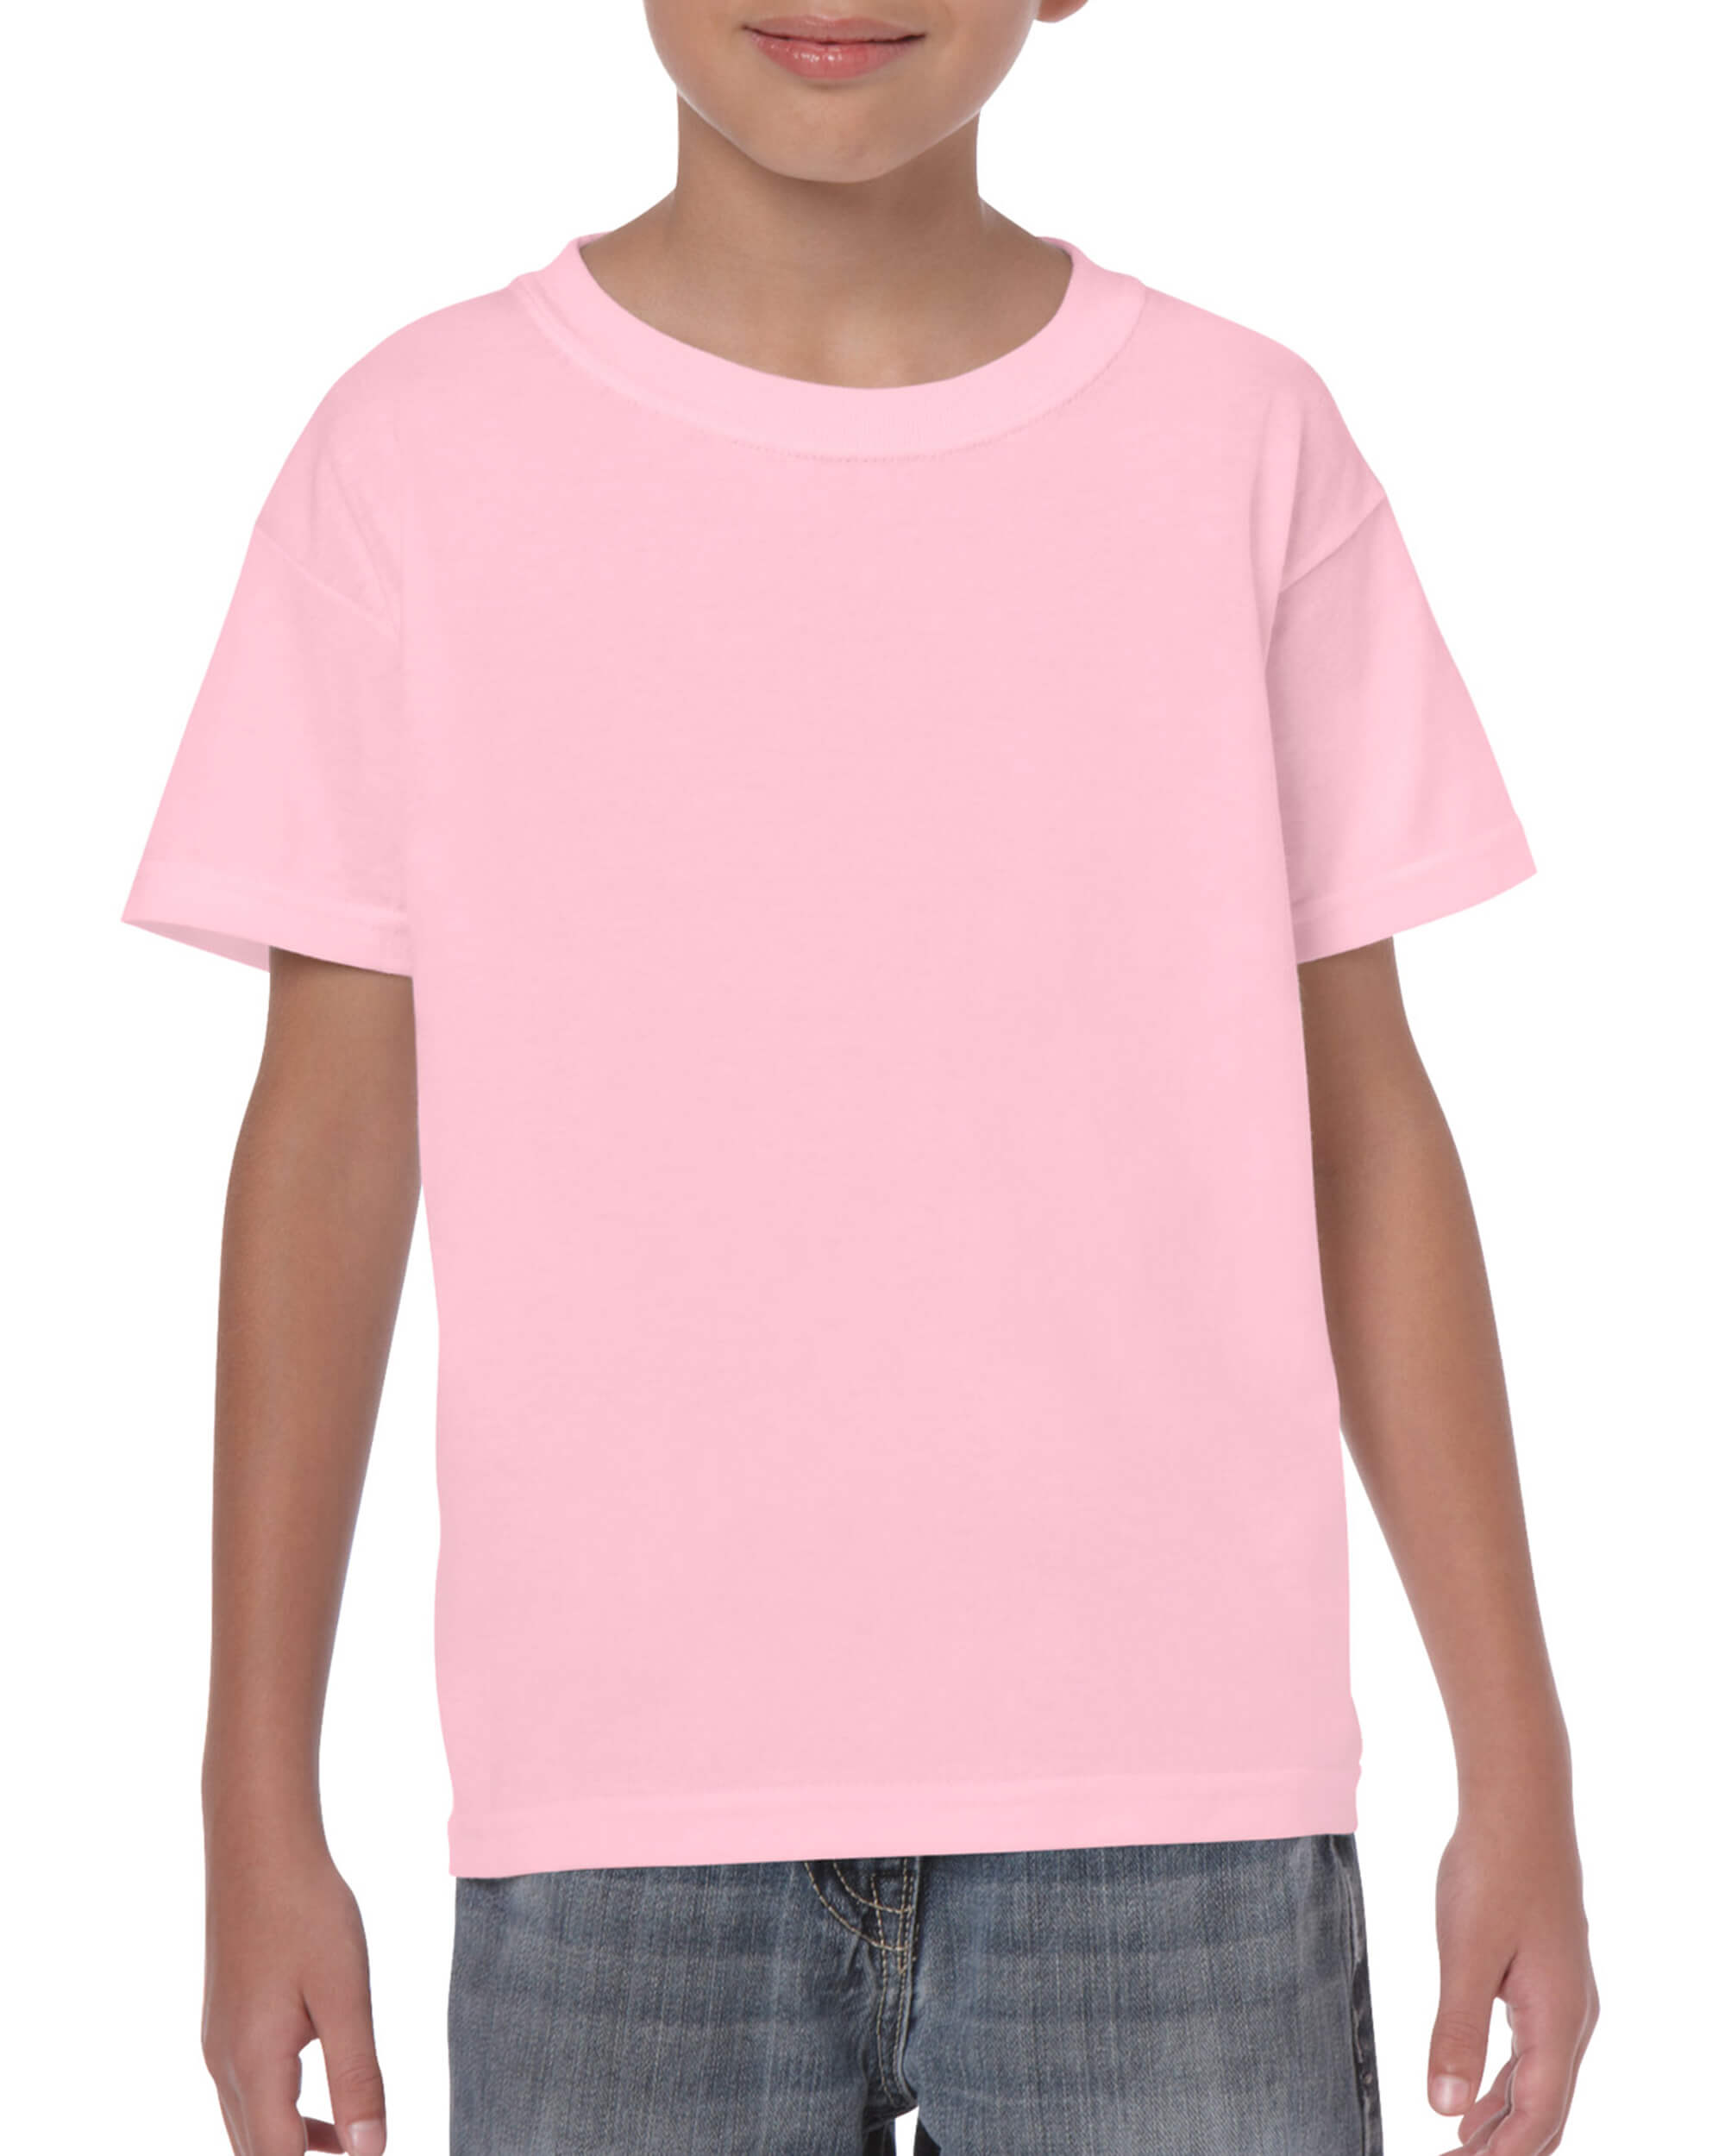 Kids Tshirt - Light Pink